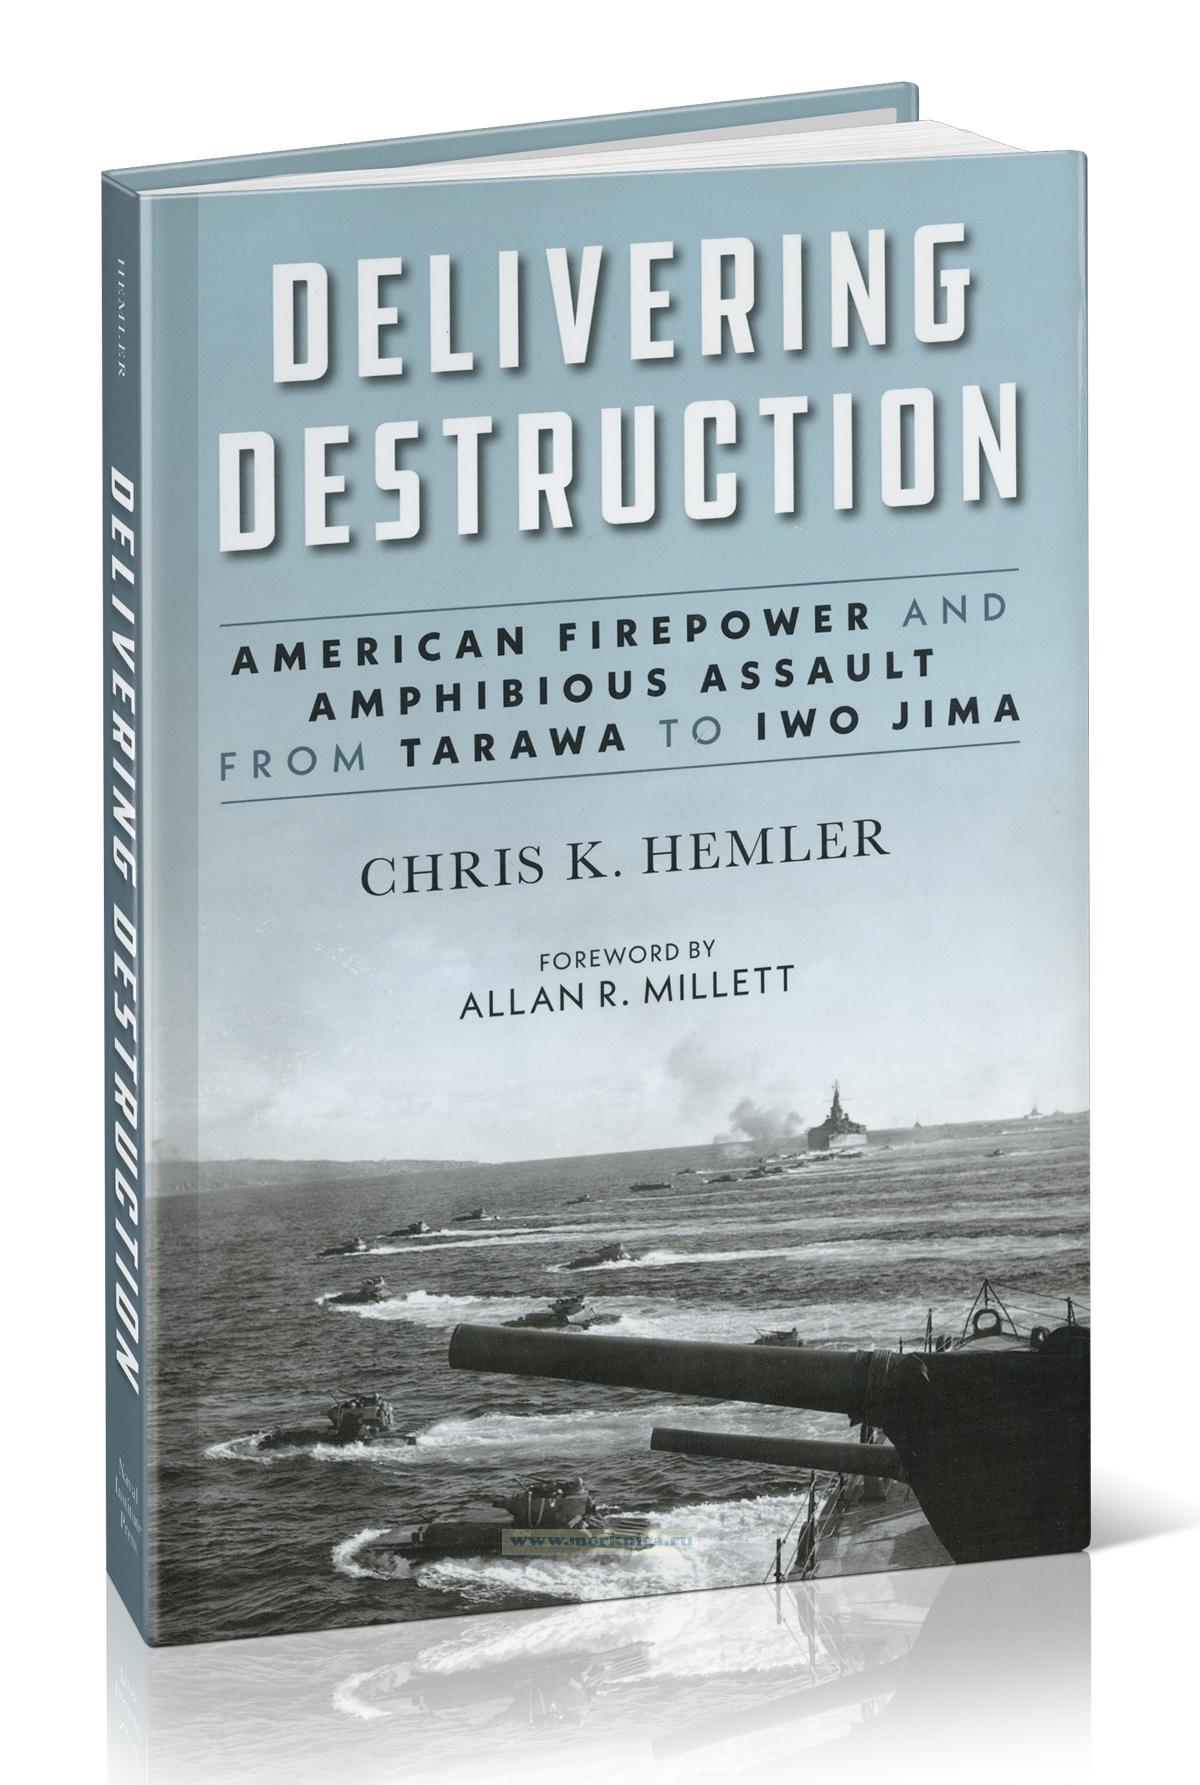 Delivering Destruction. American Firepower and Amphibious Assault from Tarawa to Iwo Jima